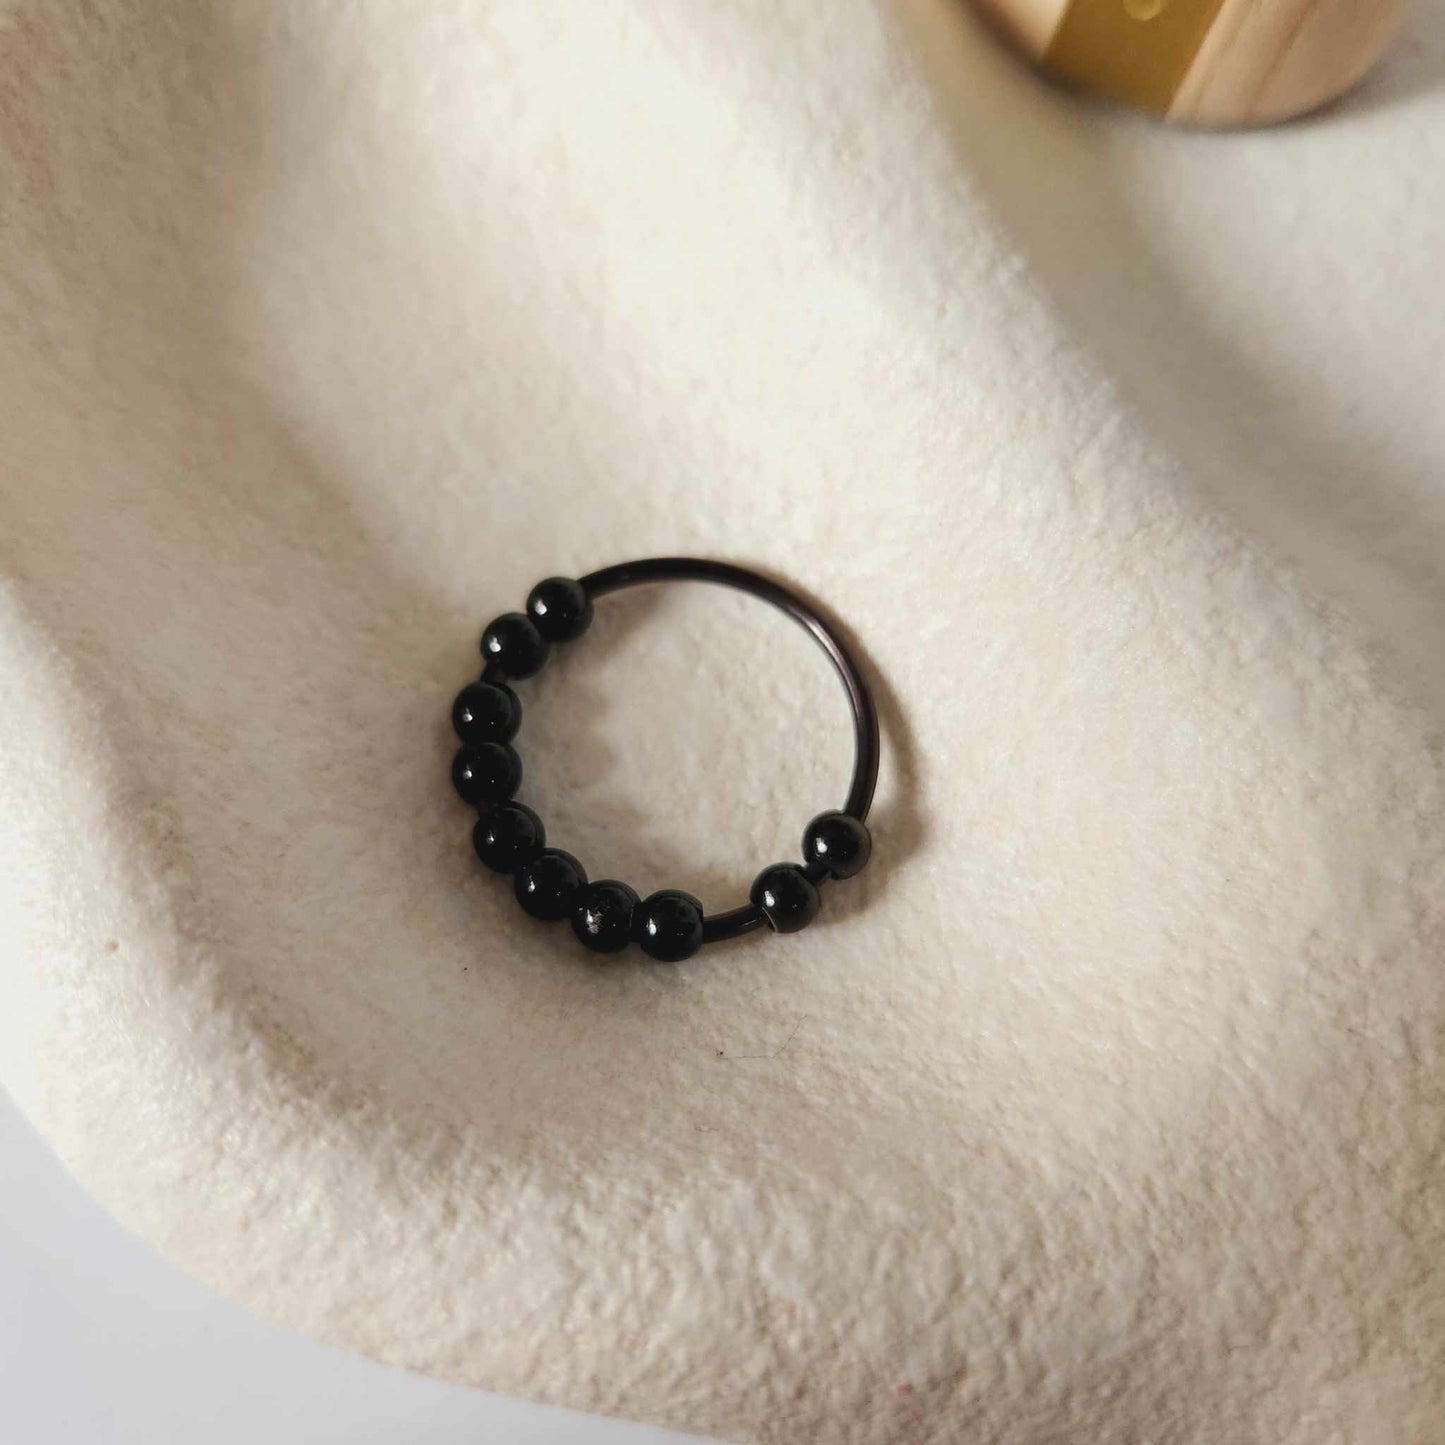 10 Beaded Ring - Black Fidget Anxiety Ring